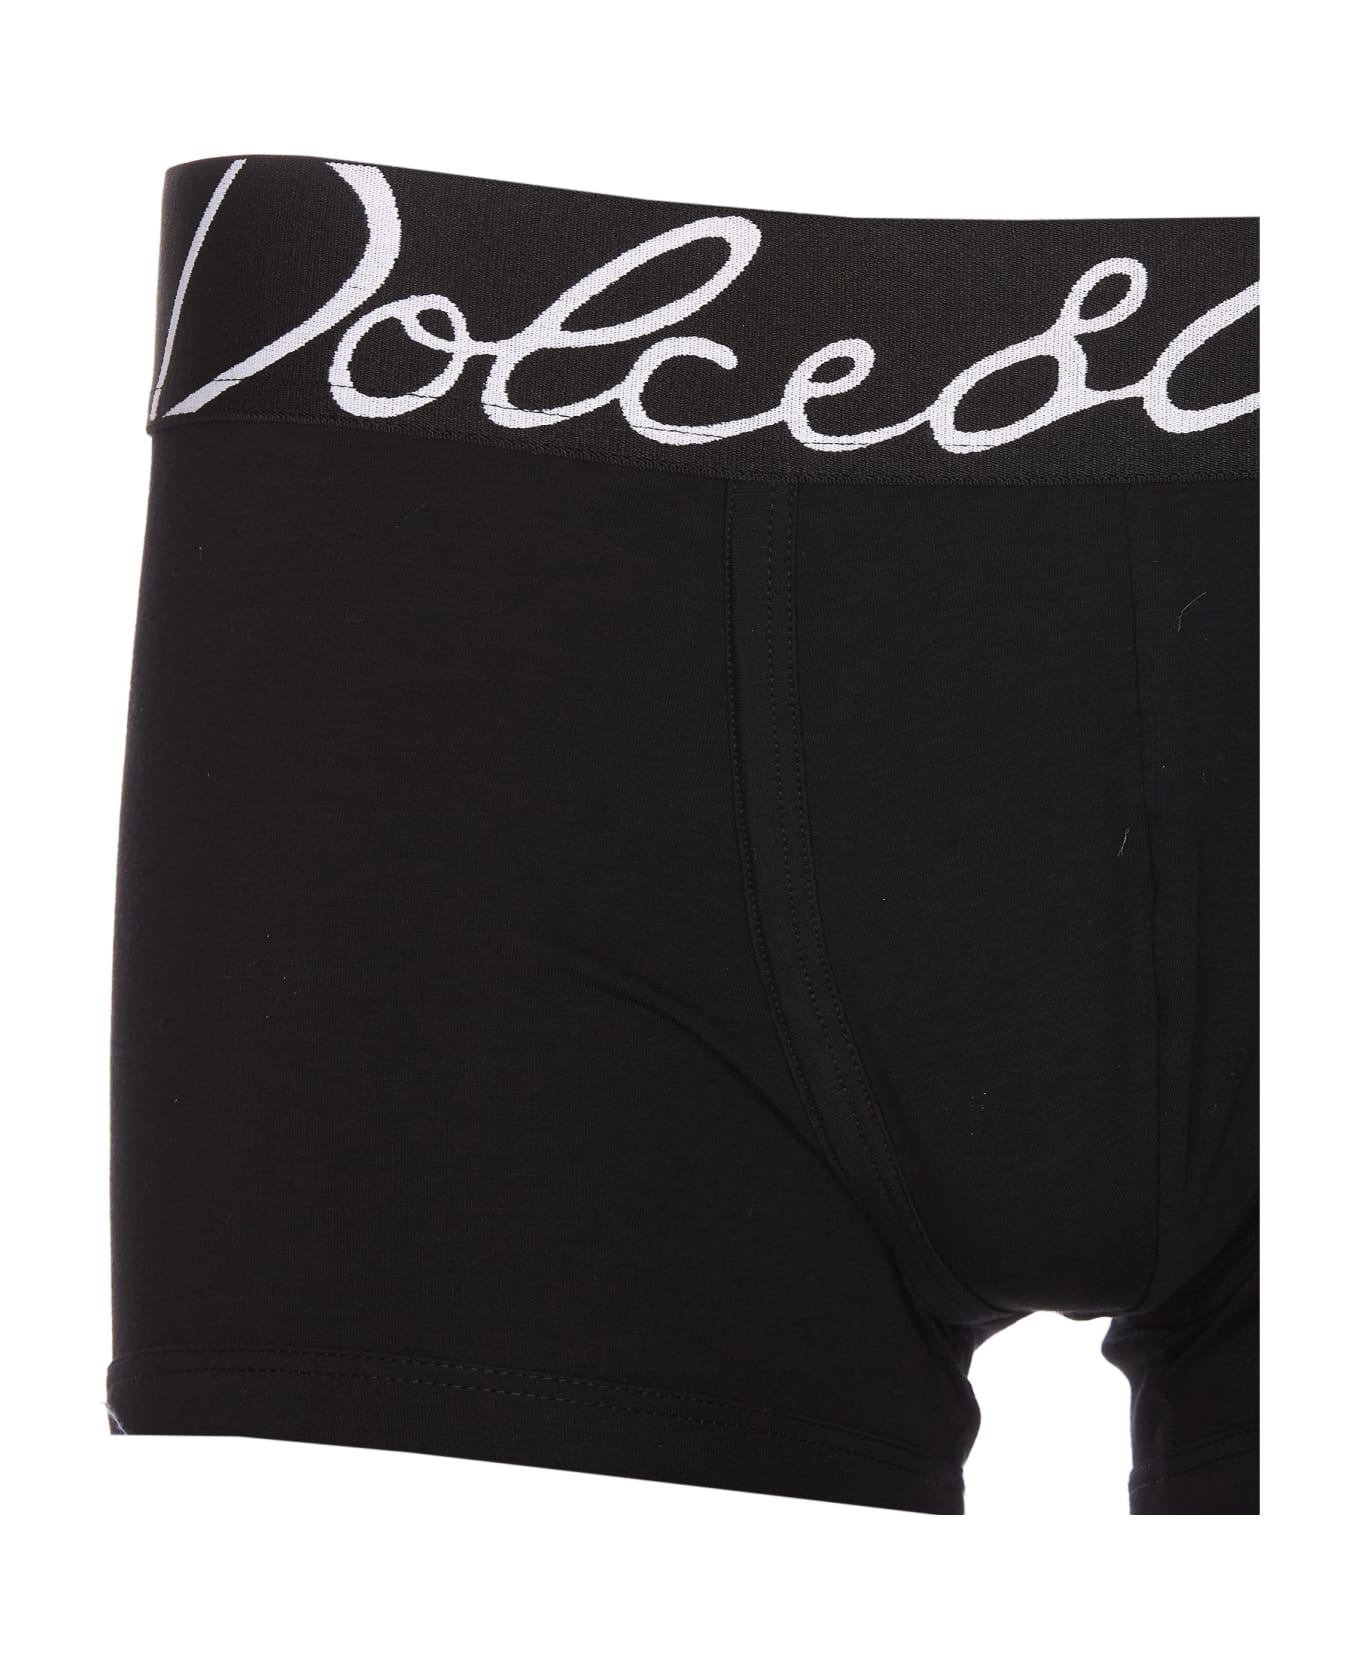 Dolce & Gabbana Logo Boxer - Black